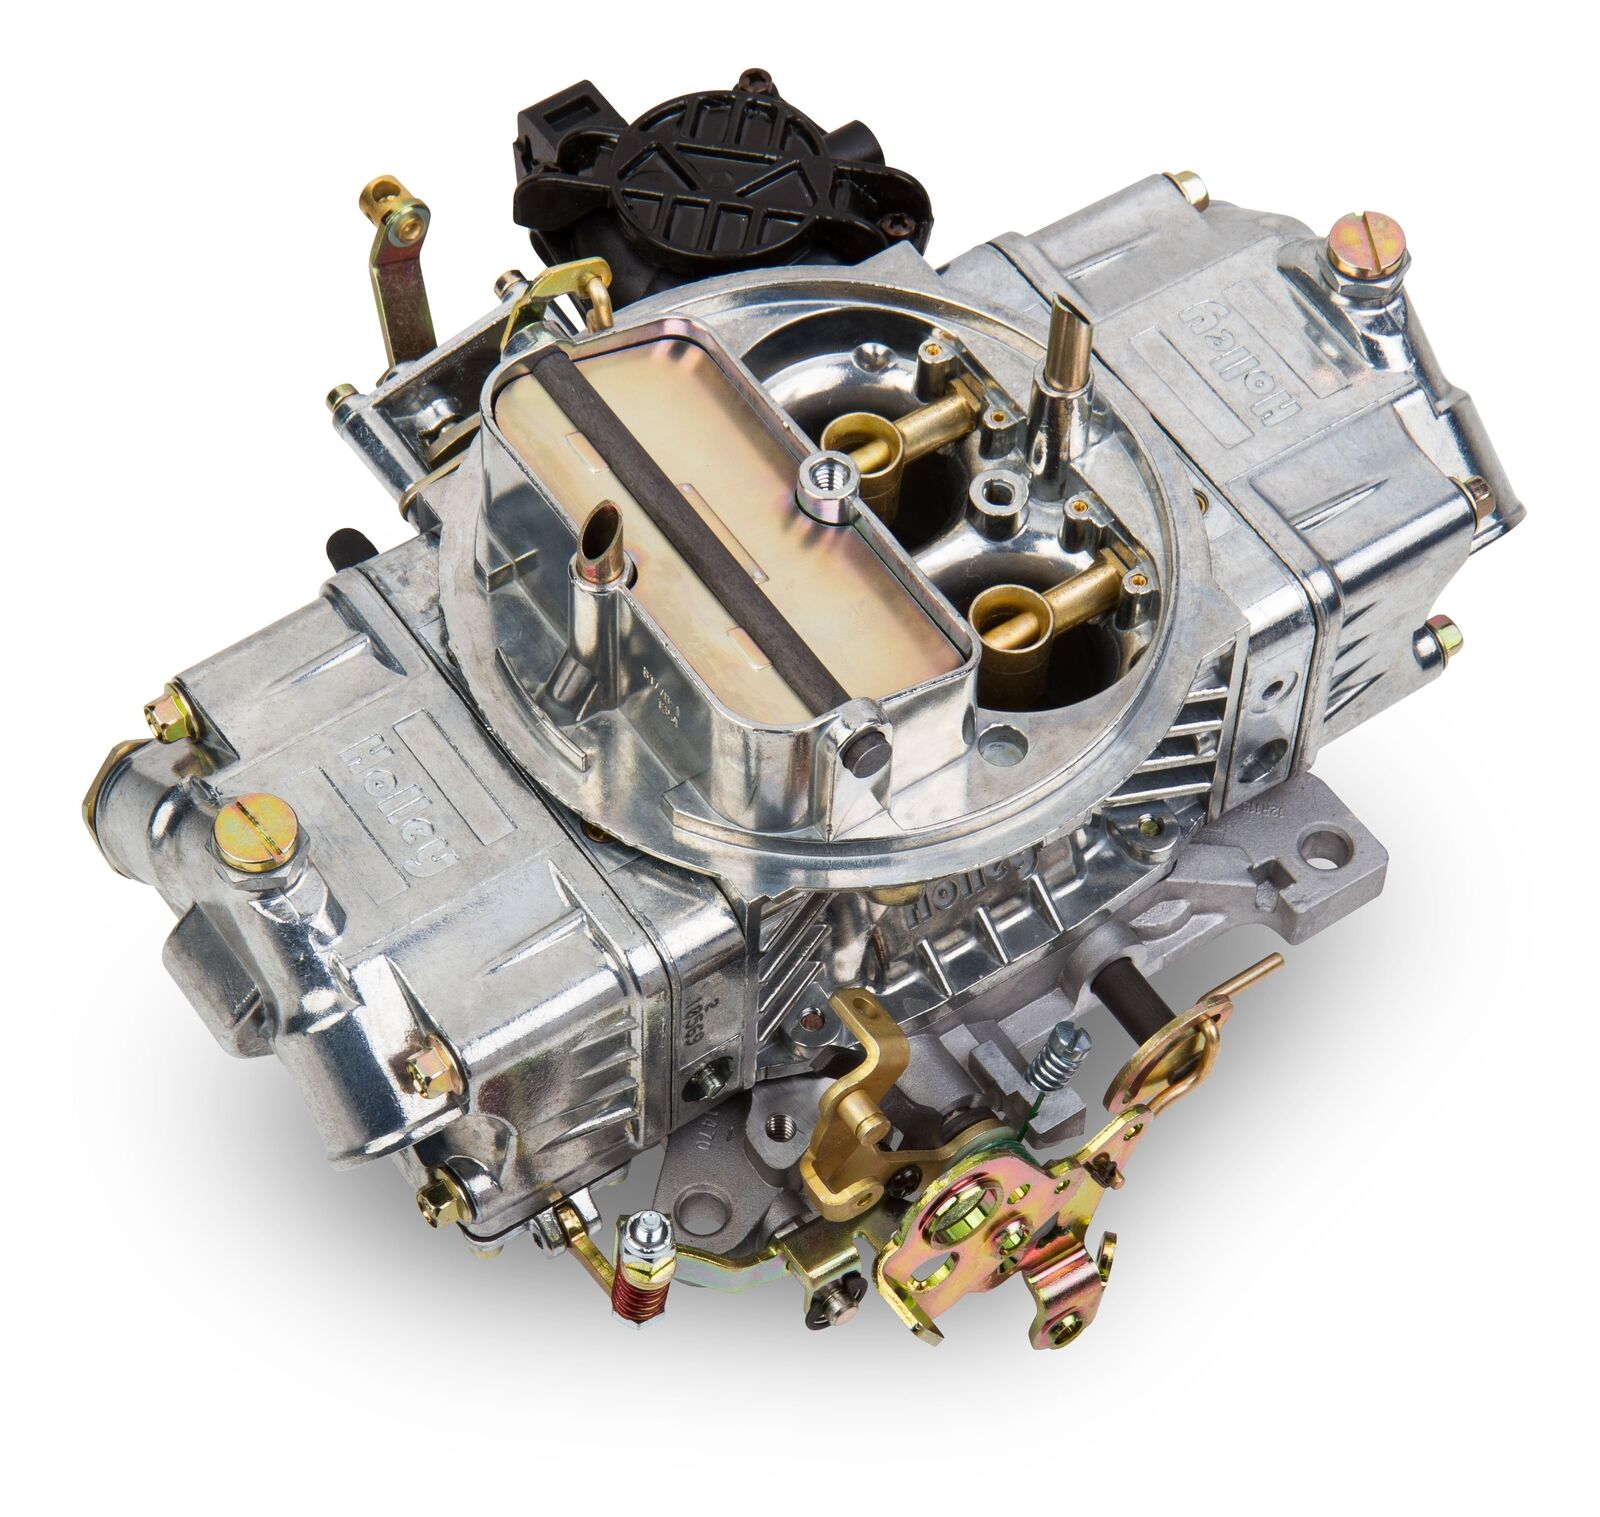 Holley 770 Cfm Street Avenger Carburetor Manual Choke Vacuum Secondary For Ford